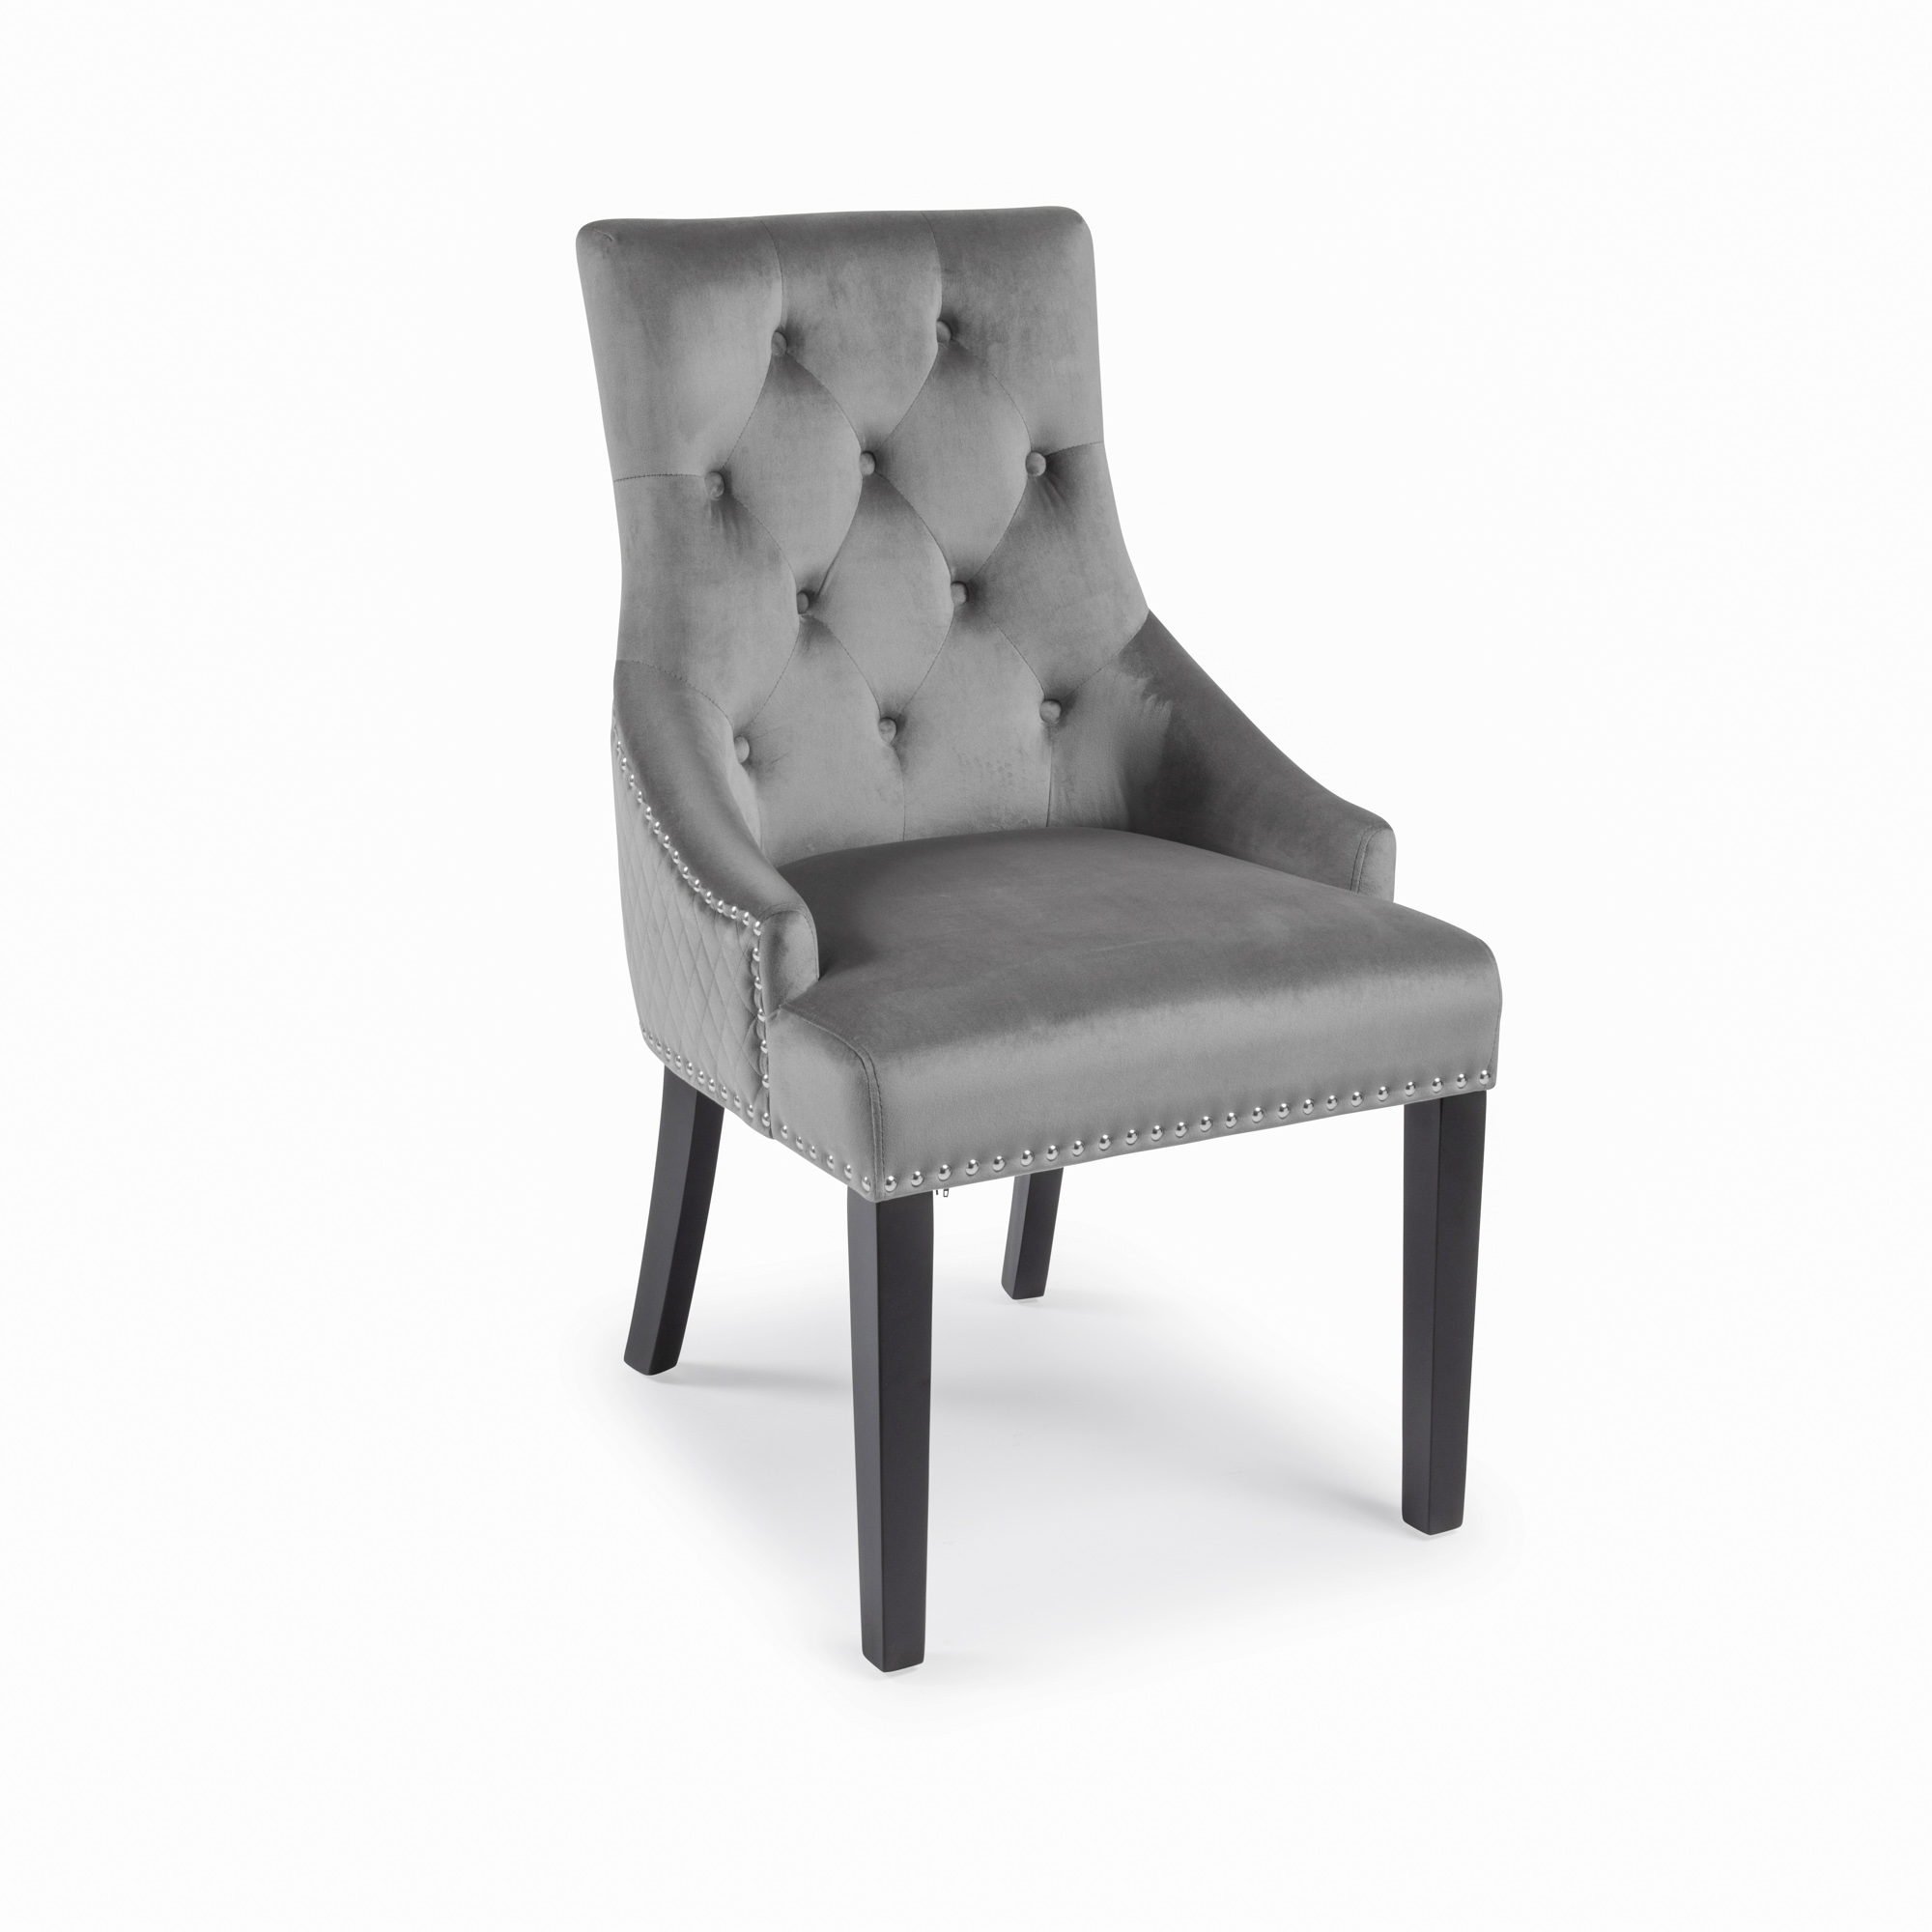 Chelsea Brushed Velvet Scoop Back Dining Chair in Grey – Diamond Stitch – Black Legs